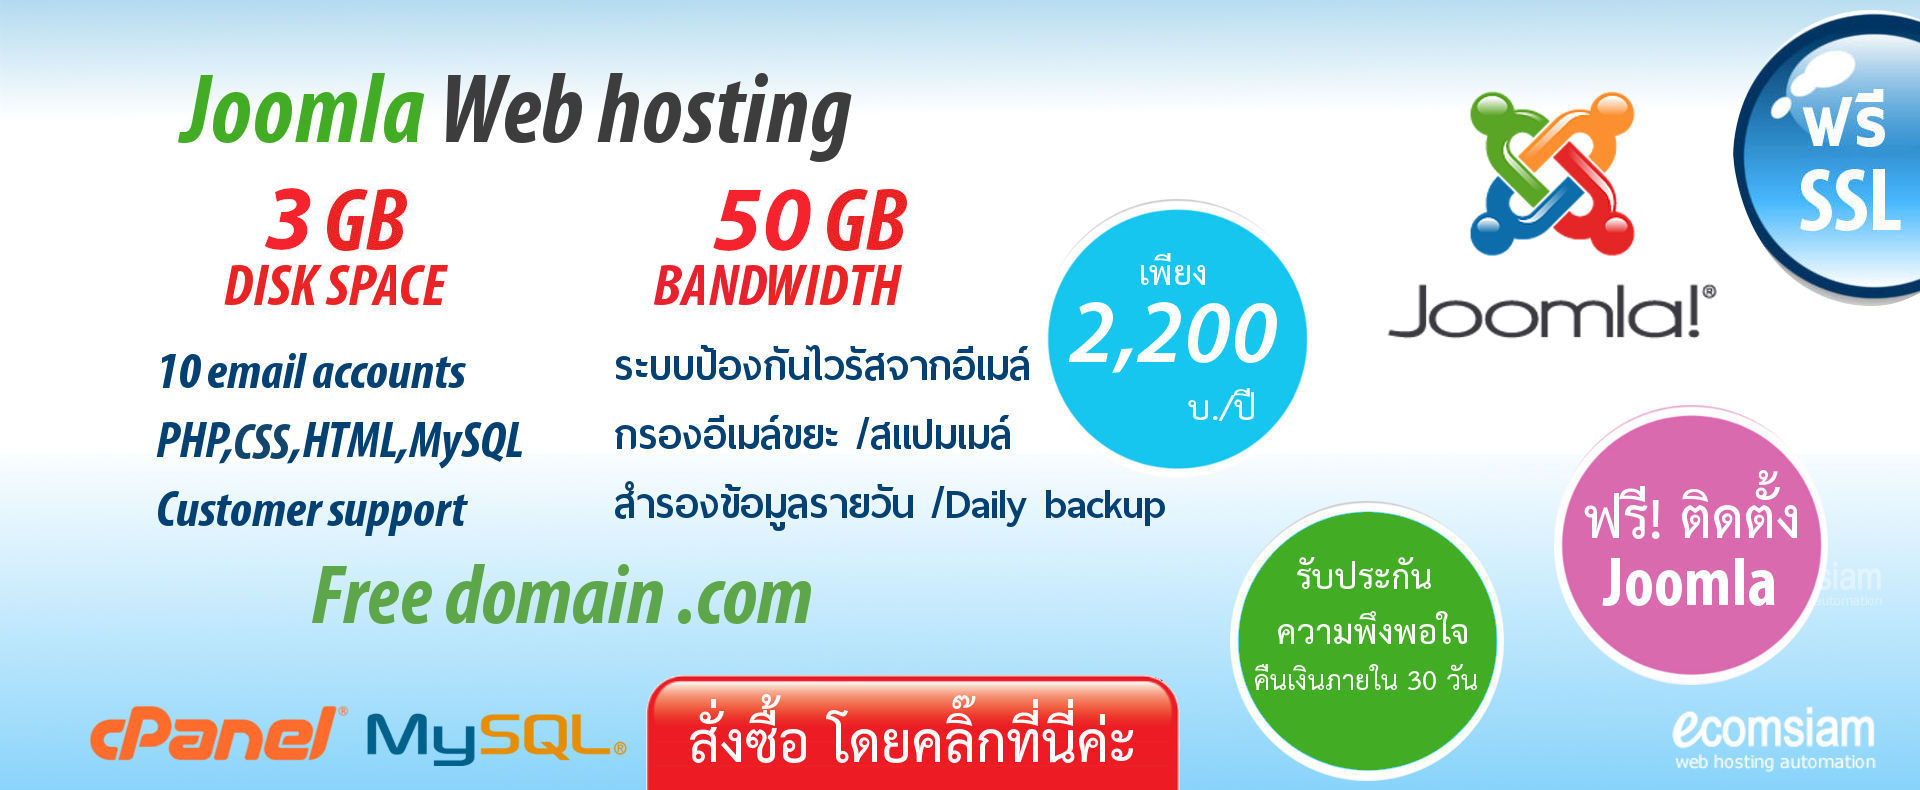 joomla web hosting thailand ฟรีโดเมน ฟรี SSL เว็บโฮสติ้งไทย ราคาเบาๆ เริ่มต้นเพียง 2200 บาทต่อปี บริการลูกค้า ดูแลดีโดย webhostthai.com